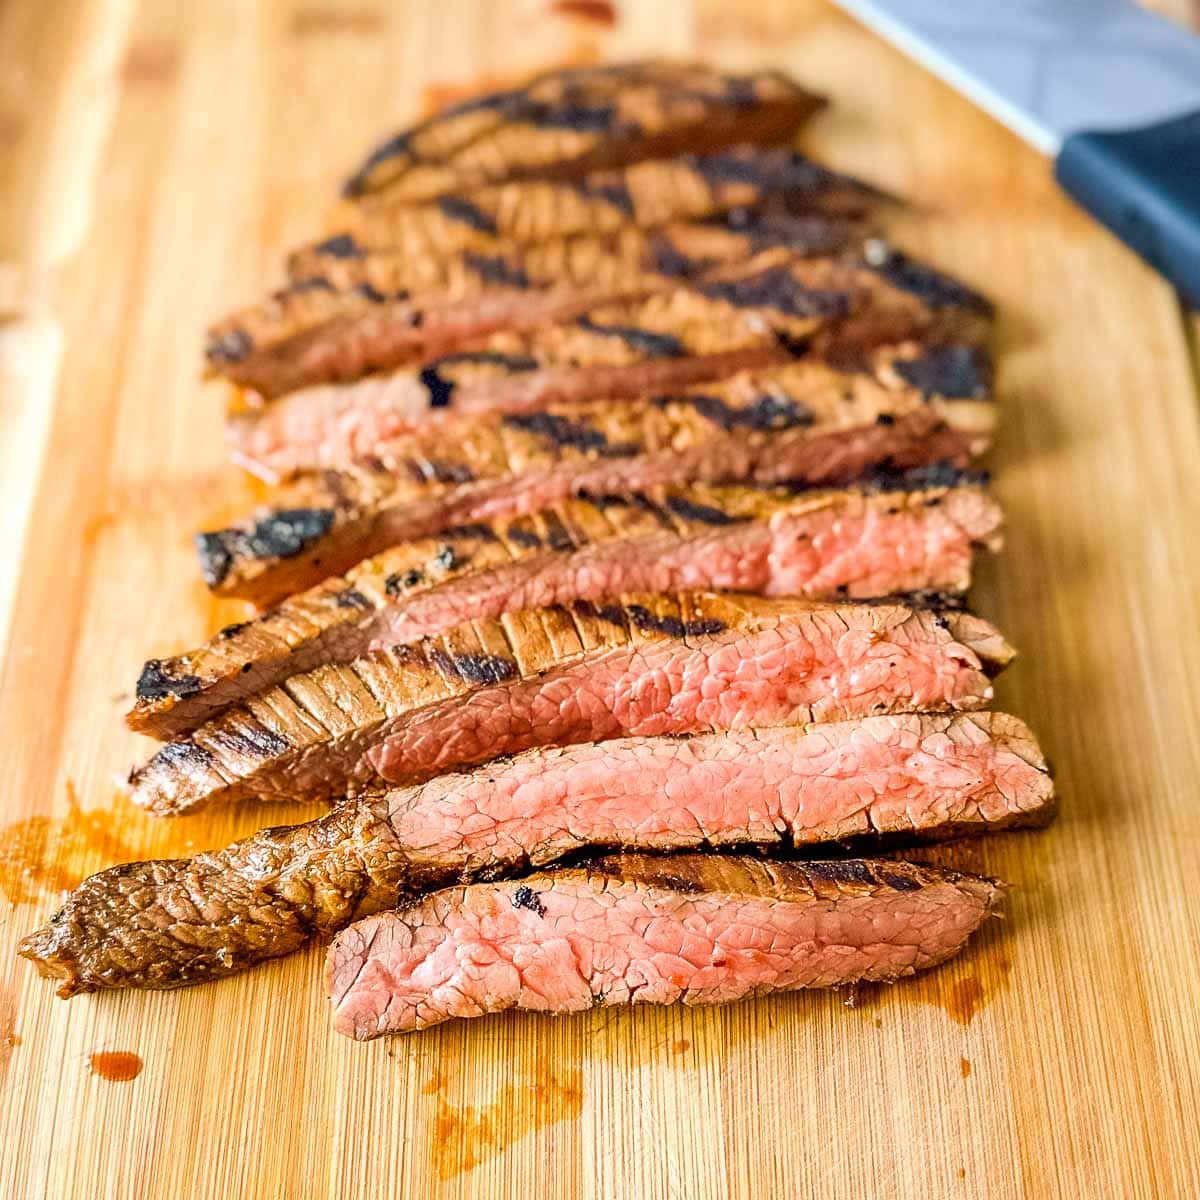 A closeup shot shows sliced carne asada on a wooden cutting board.